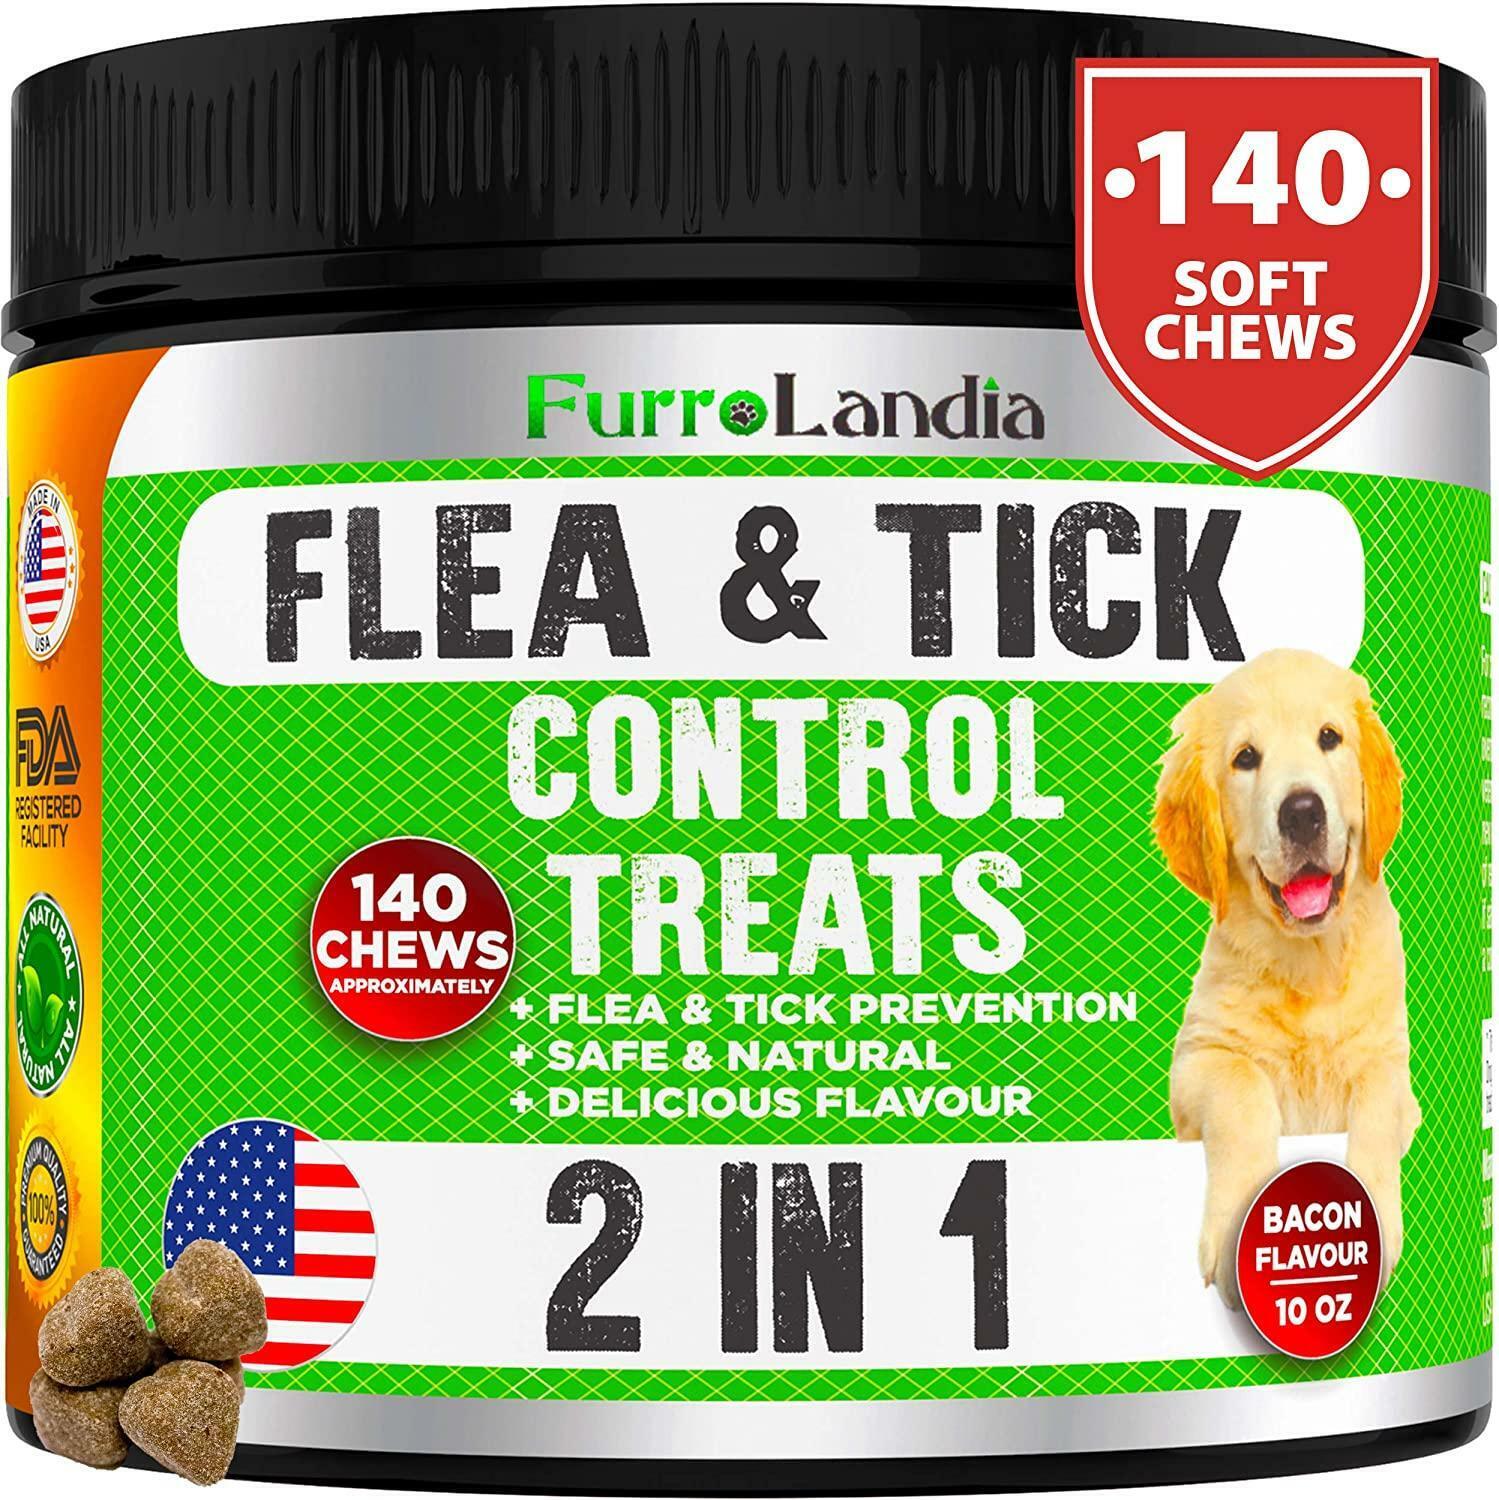 Chewable Flea & Tick Control Treats Natural Flea for Dogs 140 Soft